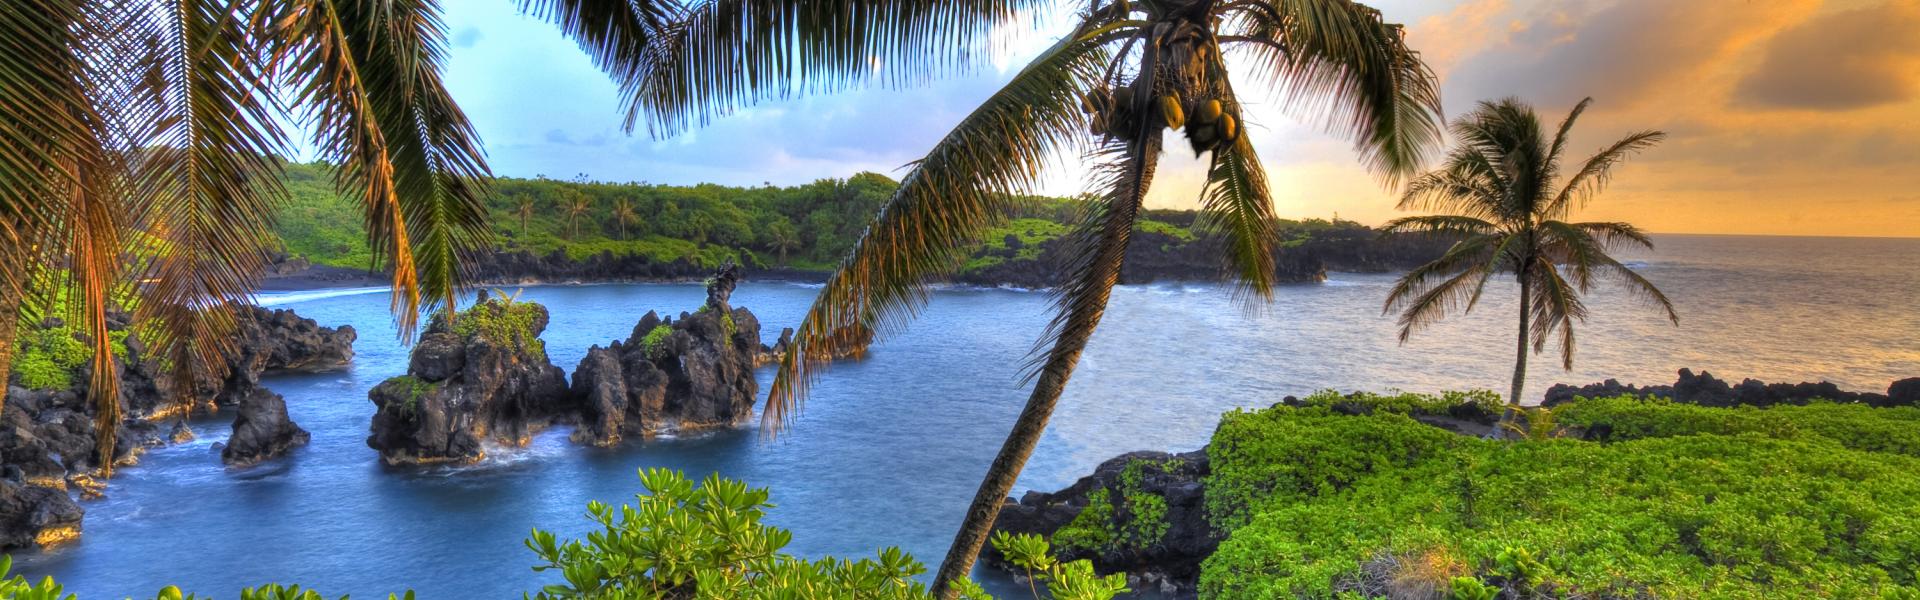 Maui Vacation Rentals - Wimdu